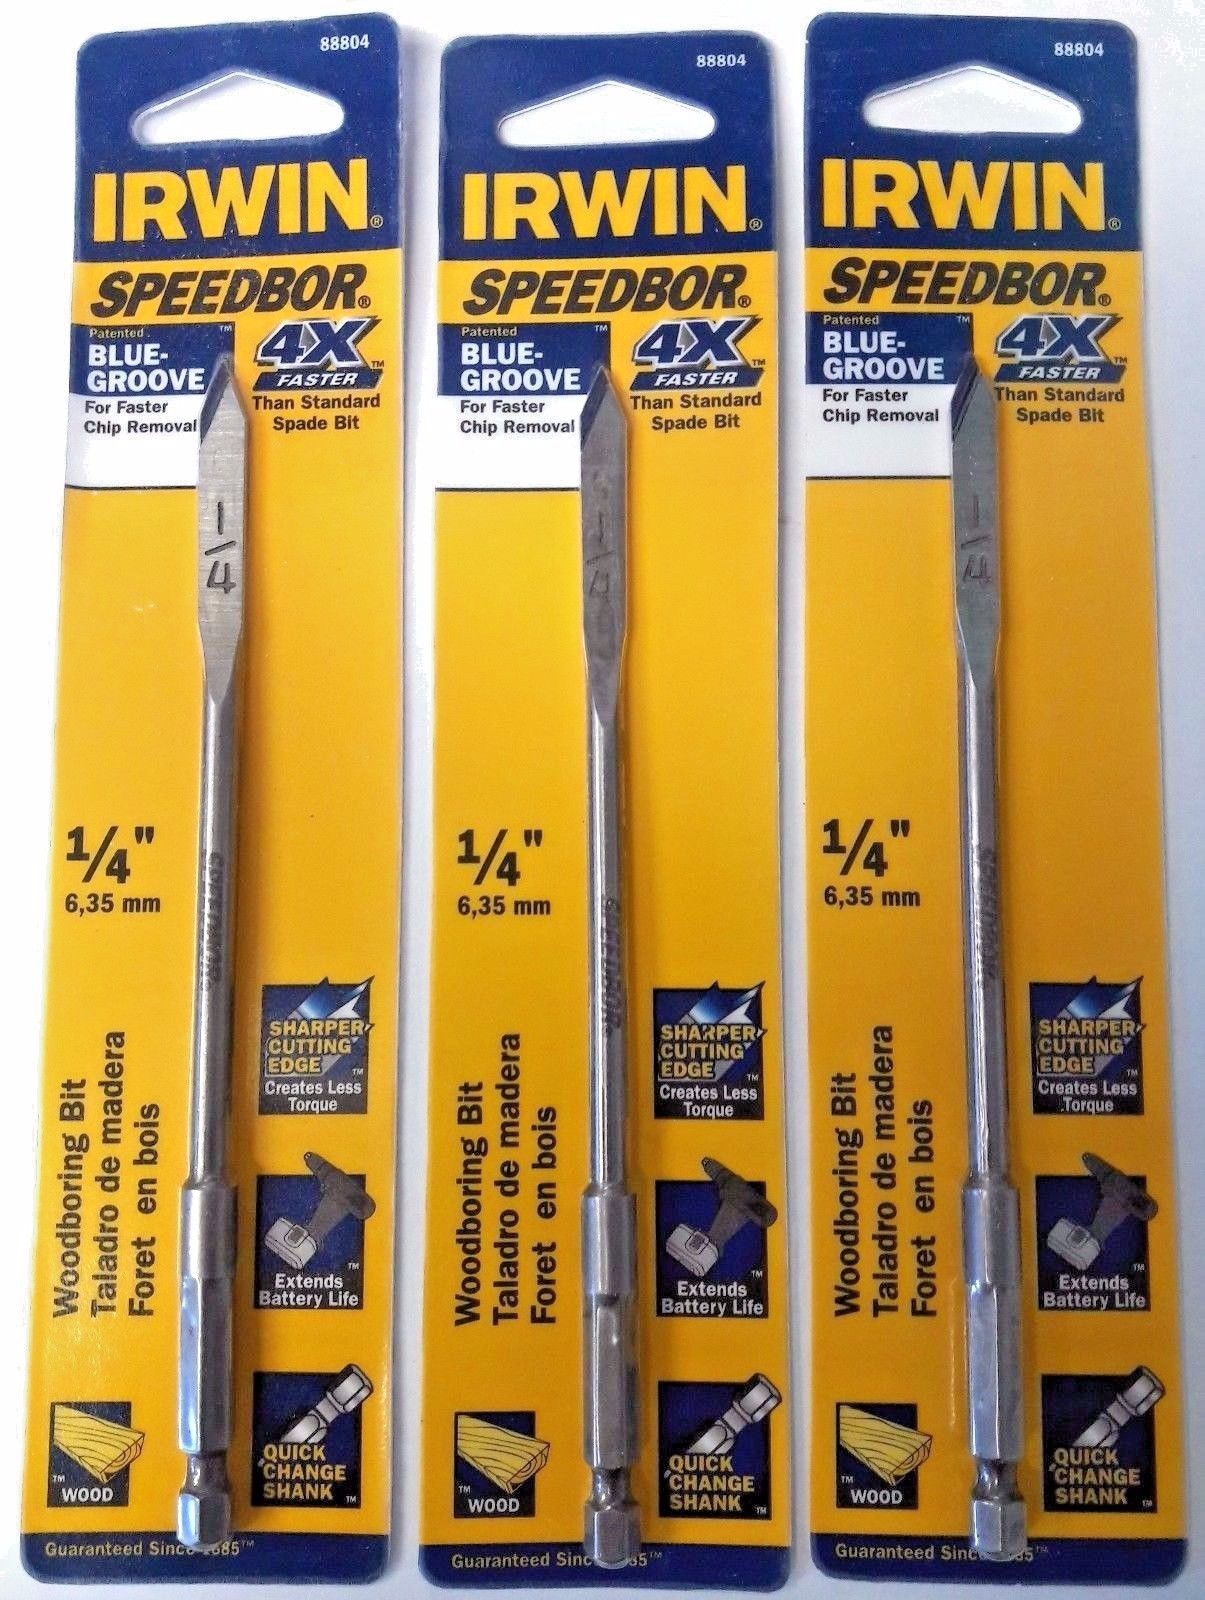 Irwin 88804 Speedbor Blue Groove Wood Boring Bit 1/4" x 6" 3PKS